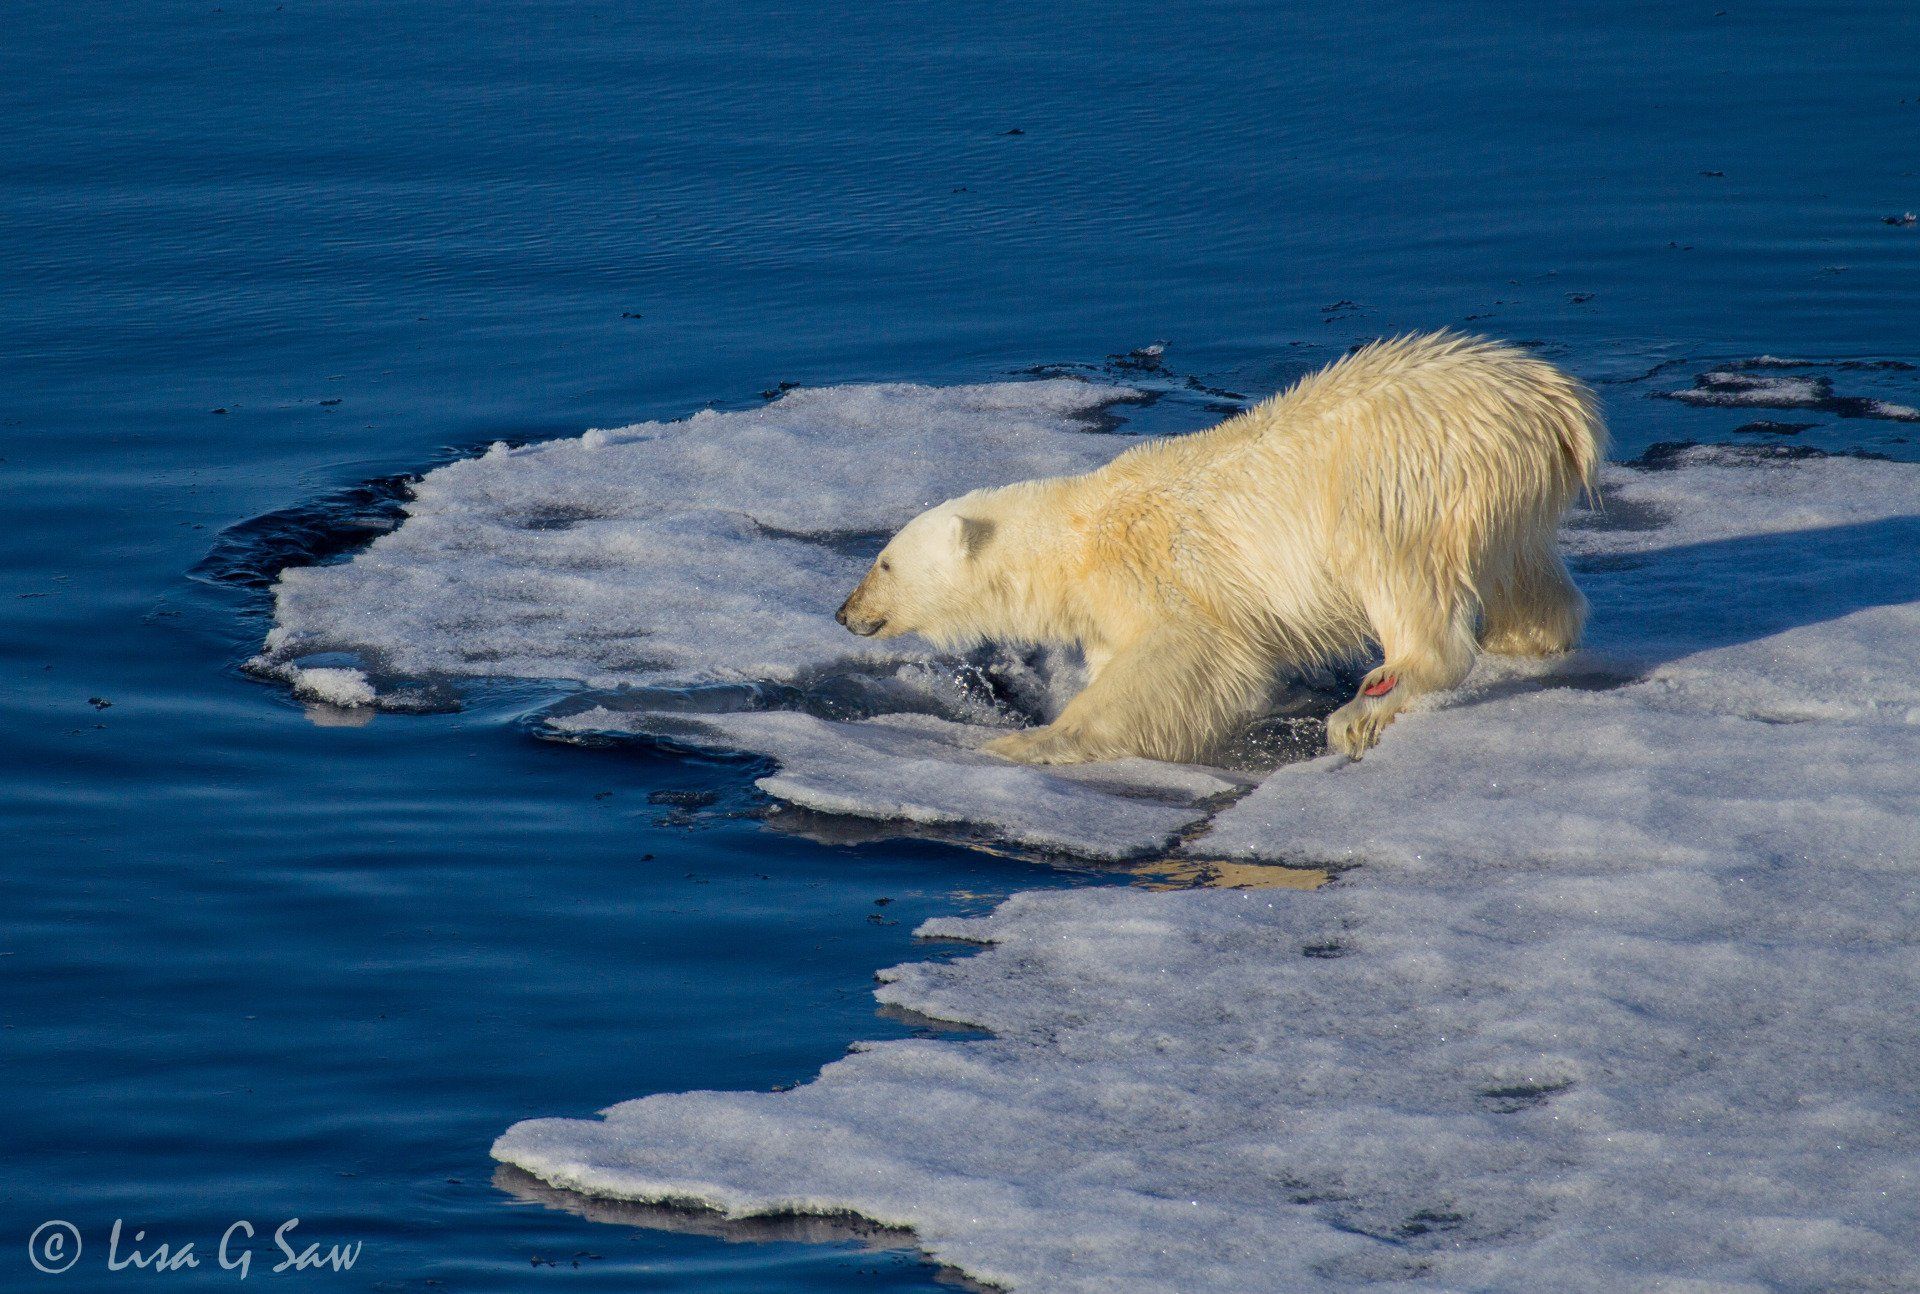 Arctic sea ice cracking under the weight of Polar Bear